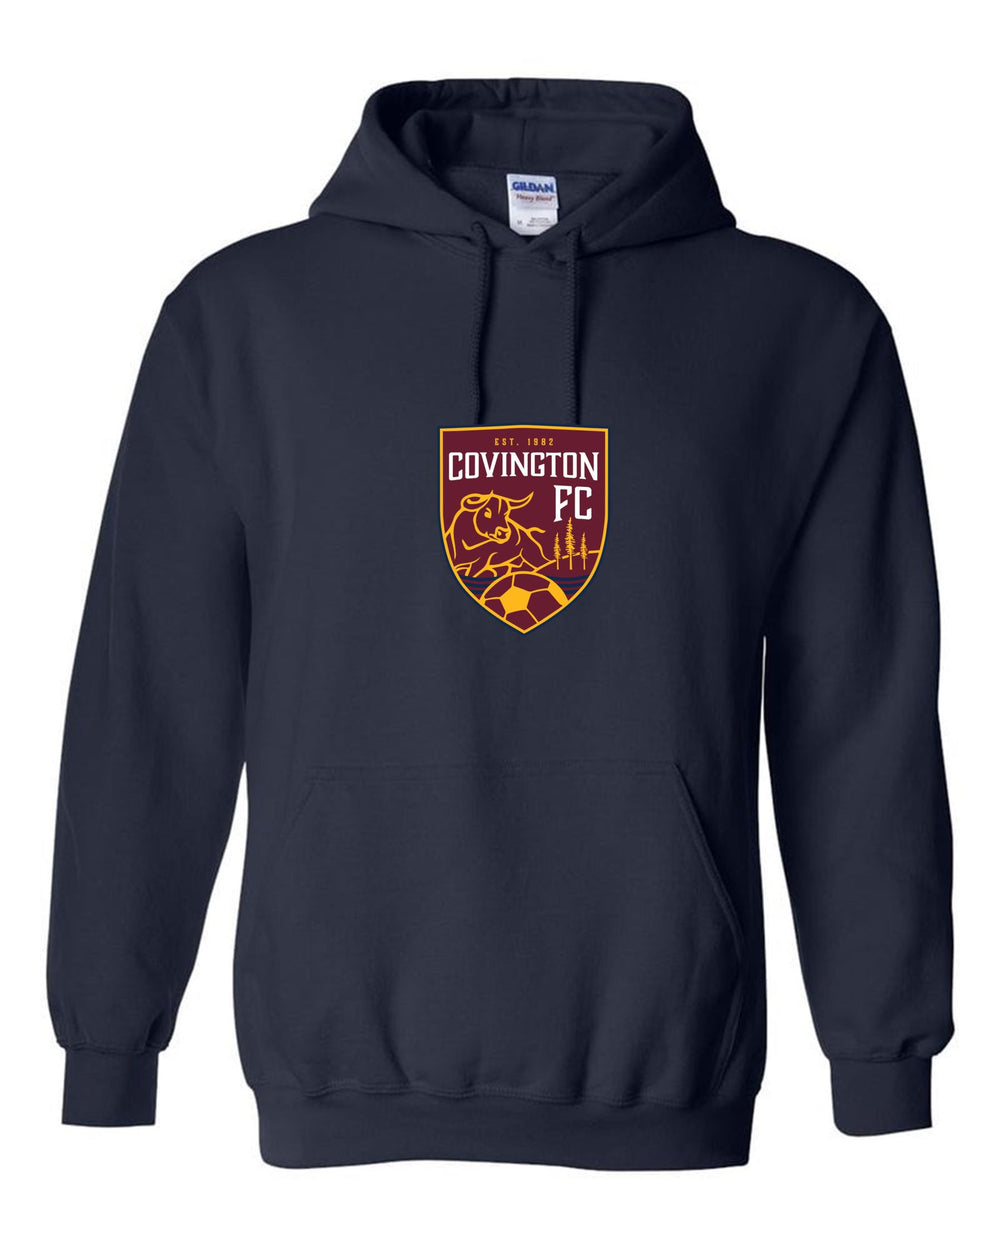 Covington FC Hooded Sweatshirt - Navy, Gold or Grey CYSA Spiritwear Navy Mens Medium - Third Coast Soccer